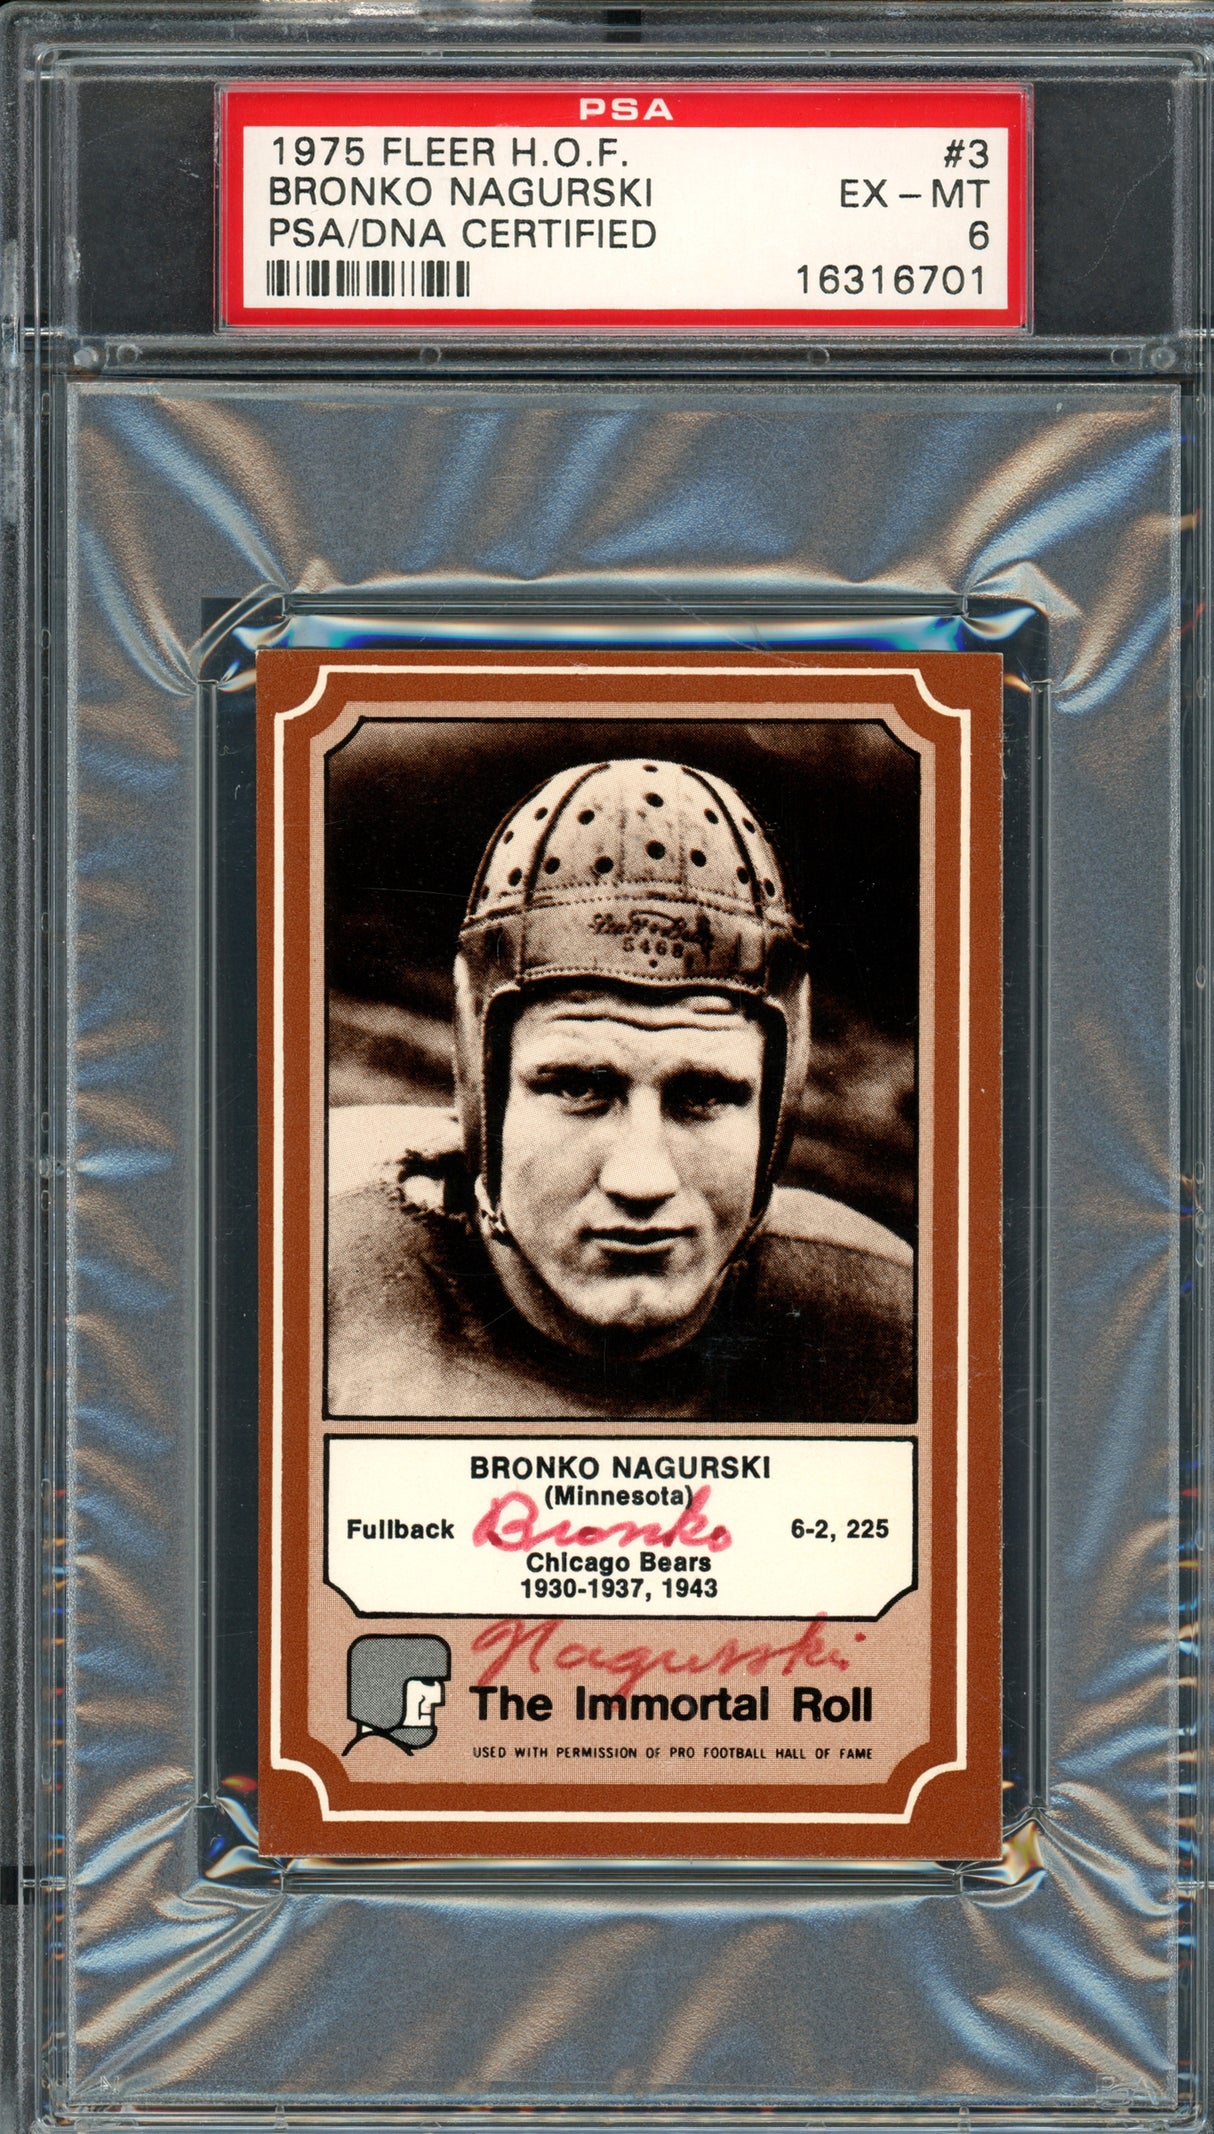 Bronko Nagurski Autographed 1975 Fleer HOF Card #3 Chicago Bears PSA 6 PSA/DNA #16316701